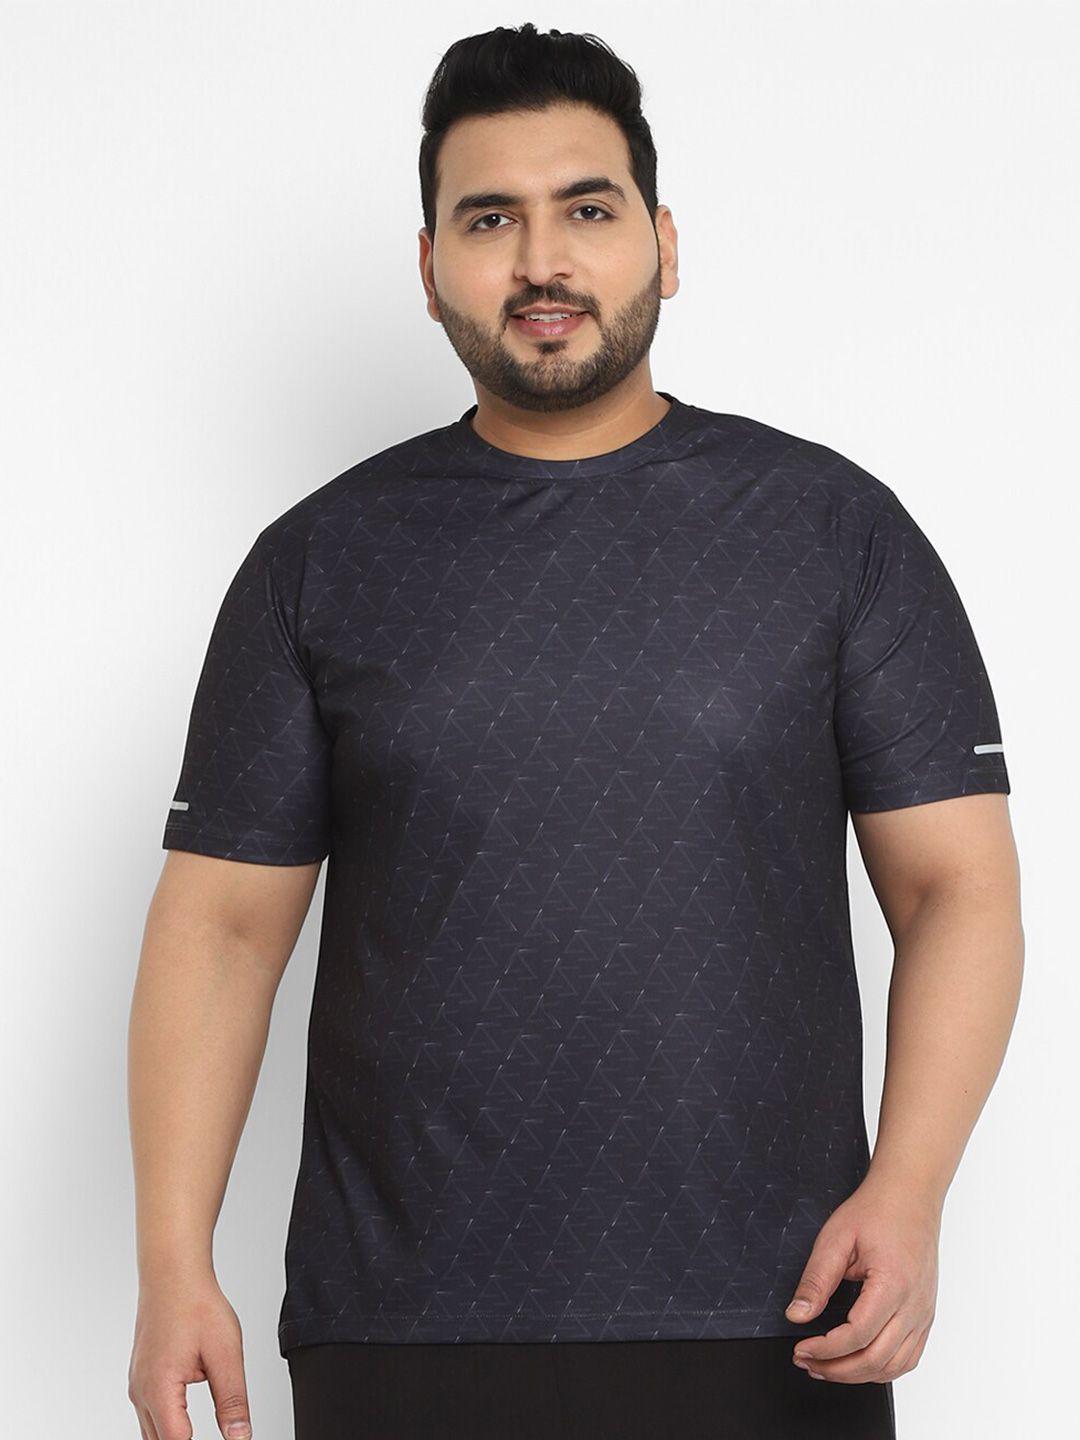 sztori plus size active wear geometric printed t-shirt